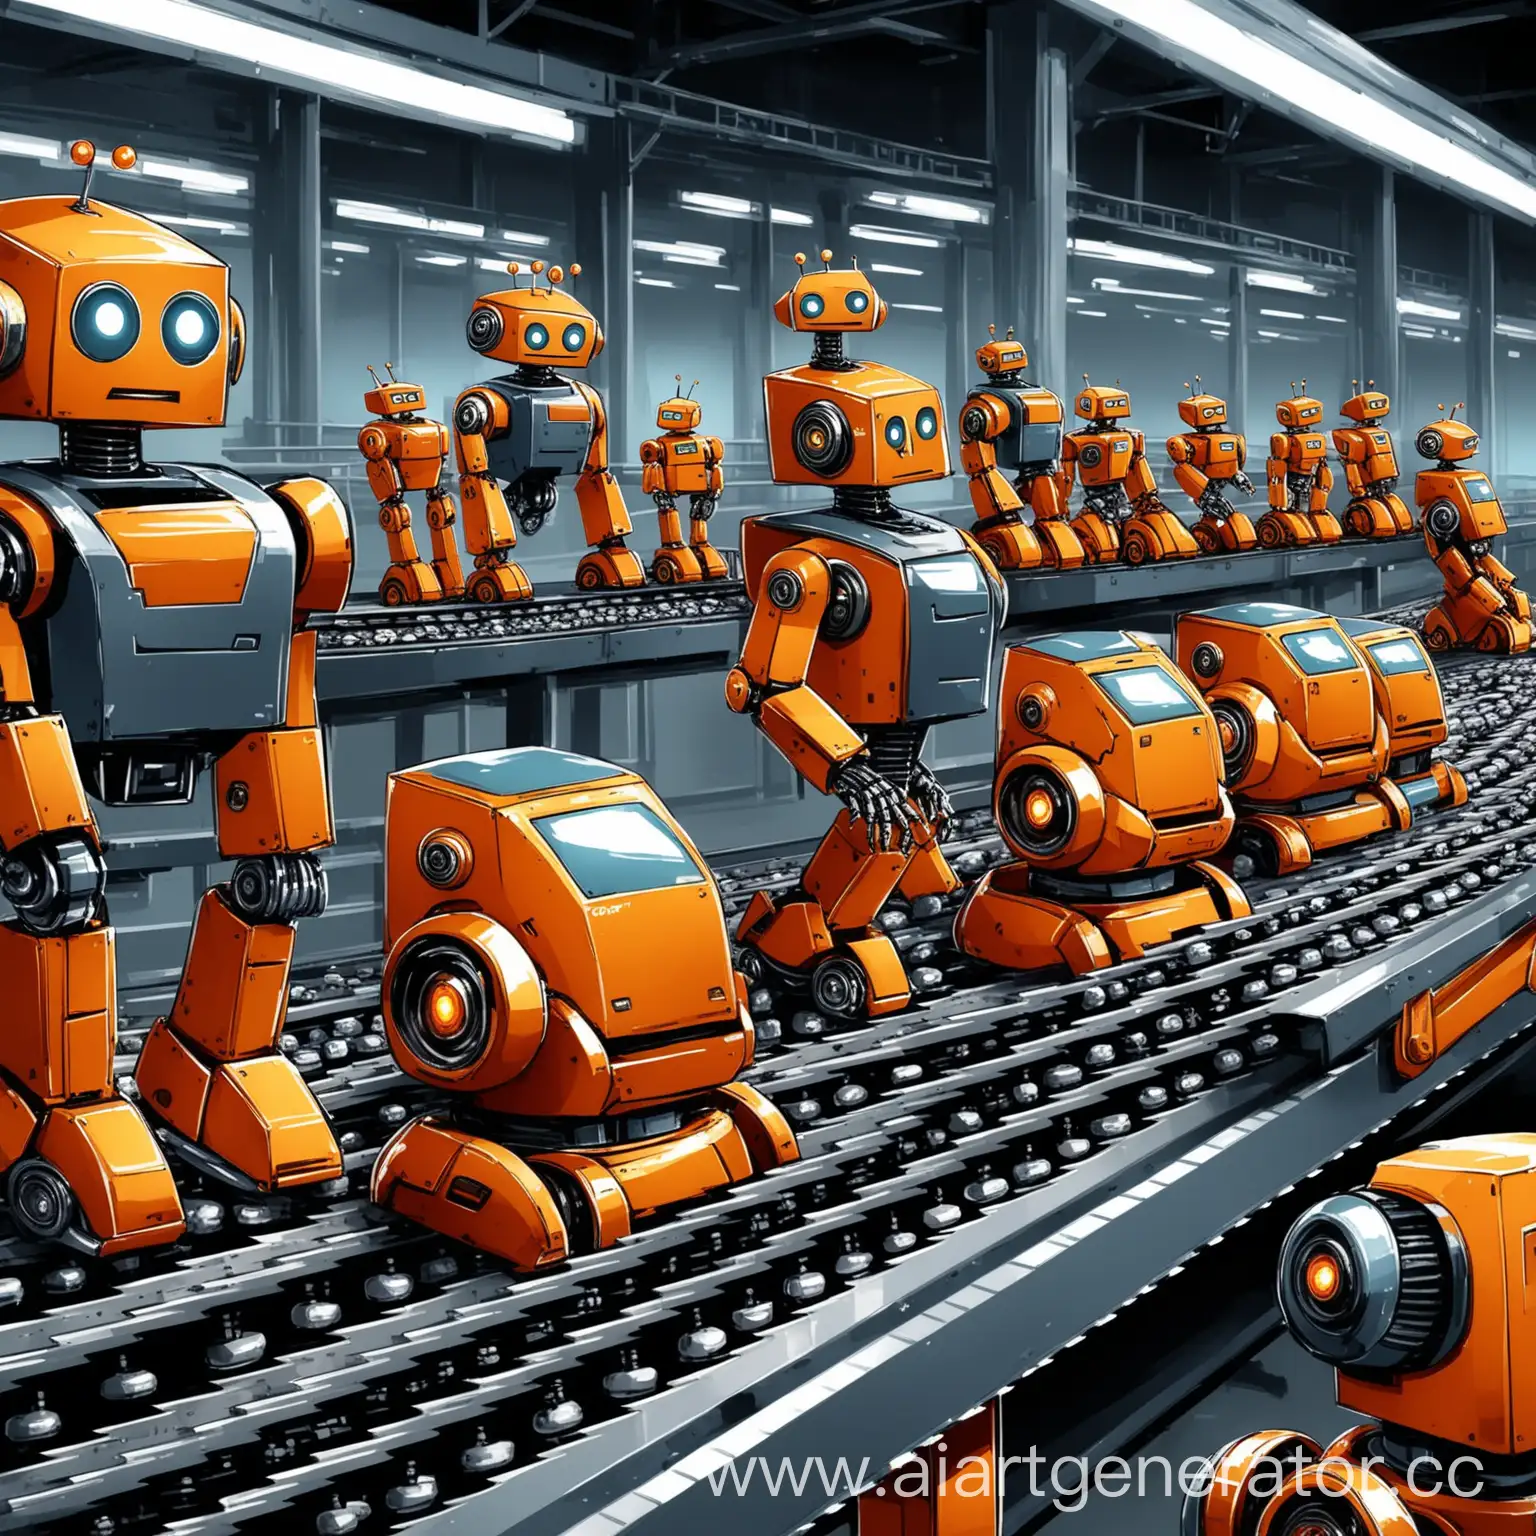 Robot-Fedy-Riding-Conveyor-Among-Identical-Robots